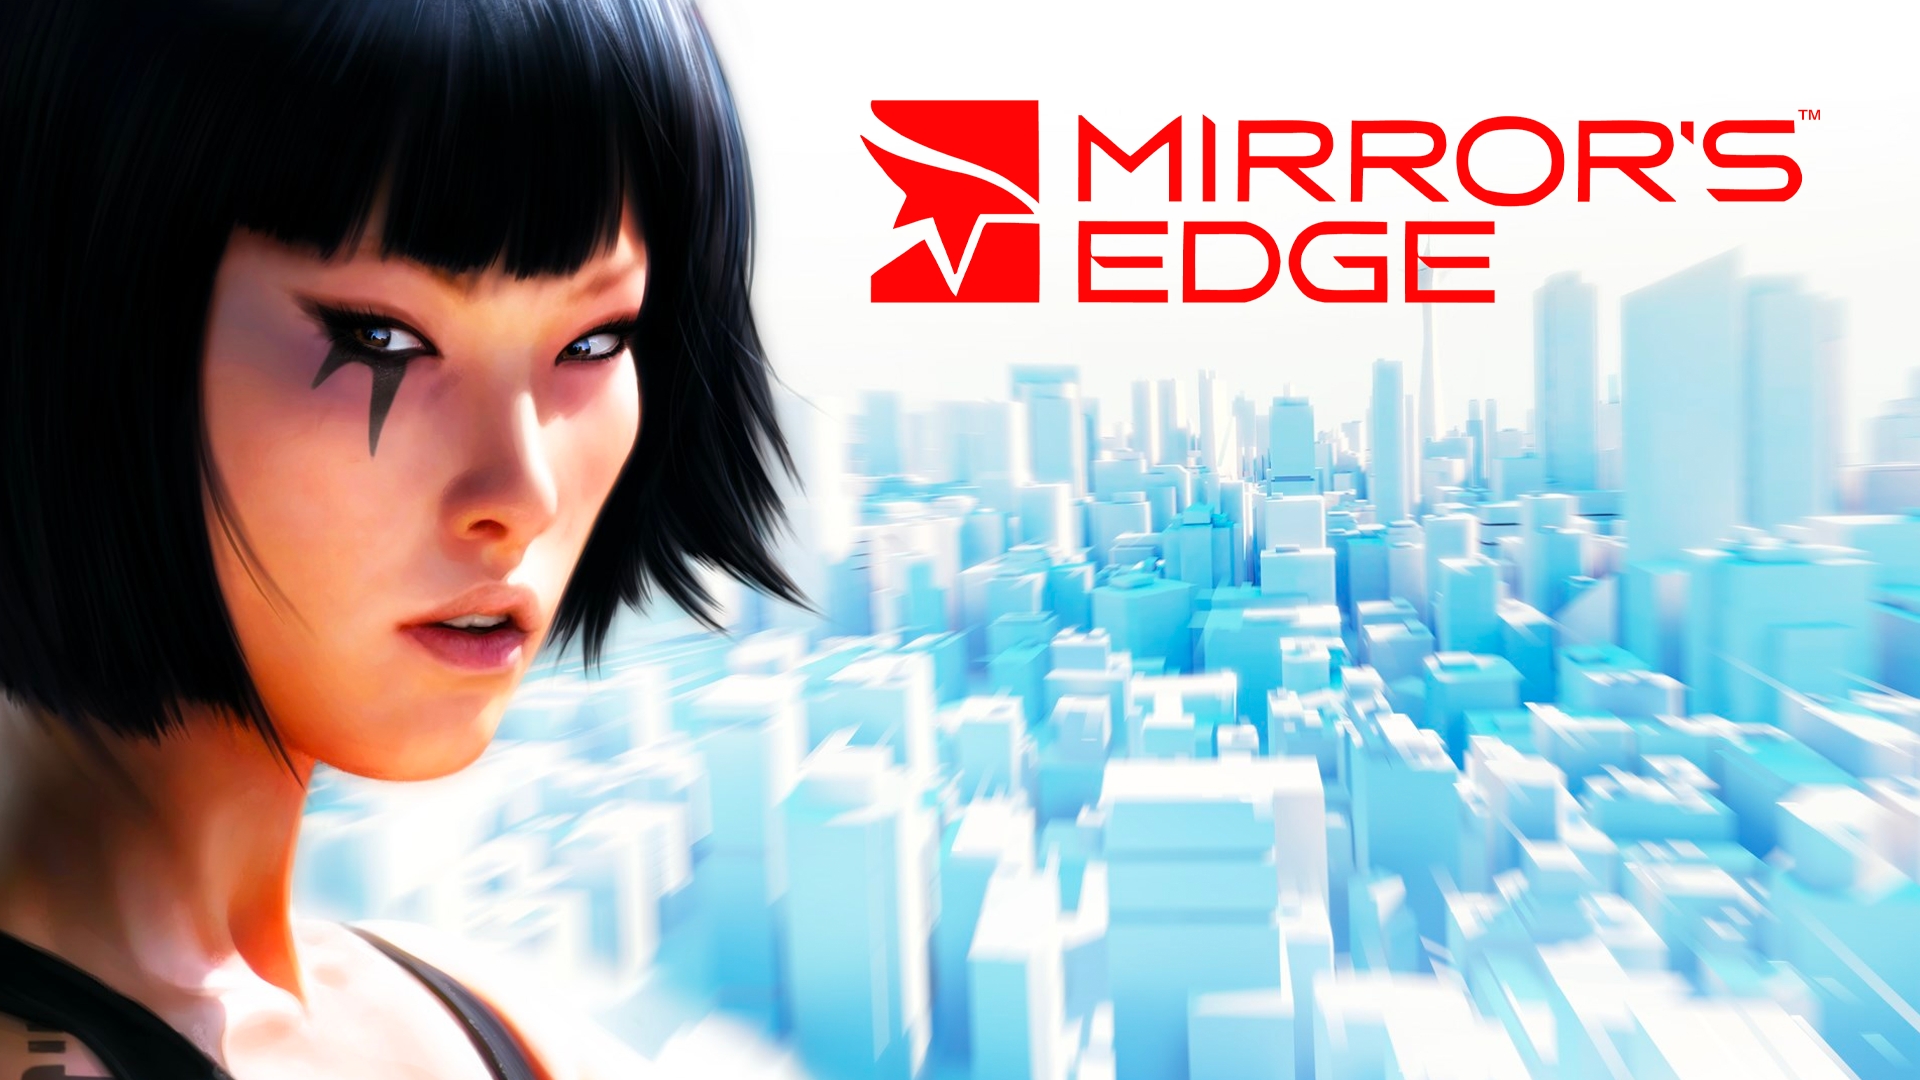 mirror-s-edge-pc-game-ea-app-cover.jpg